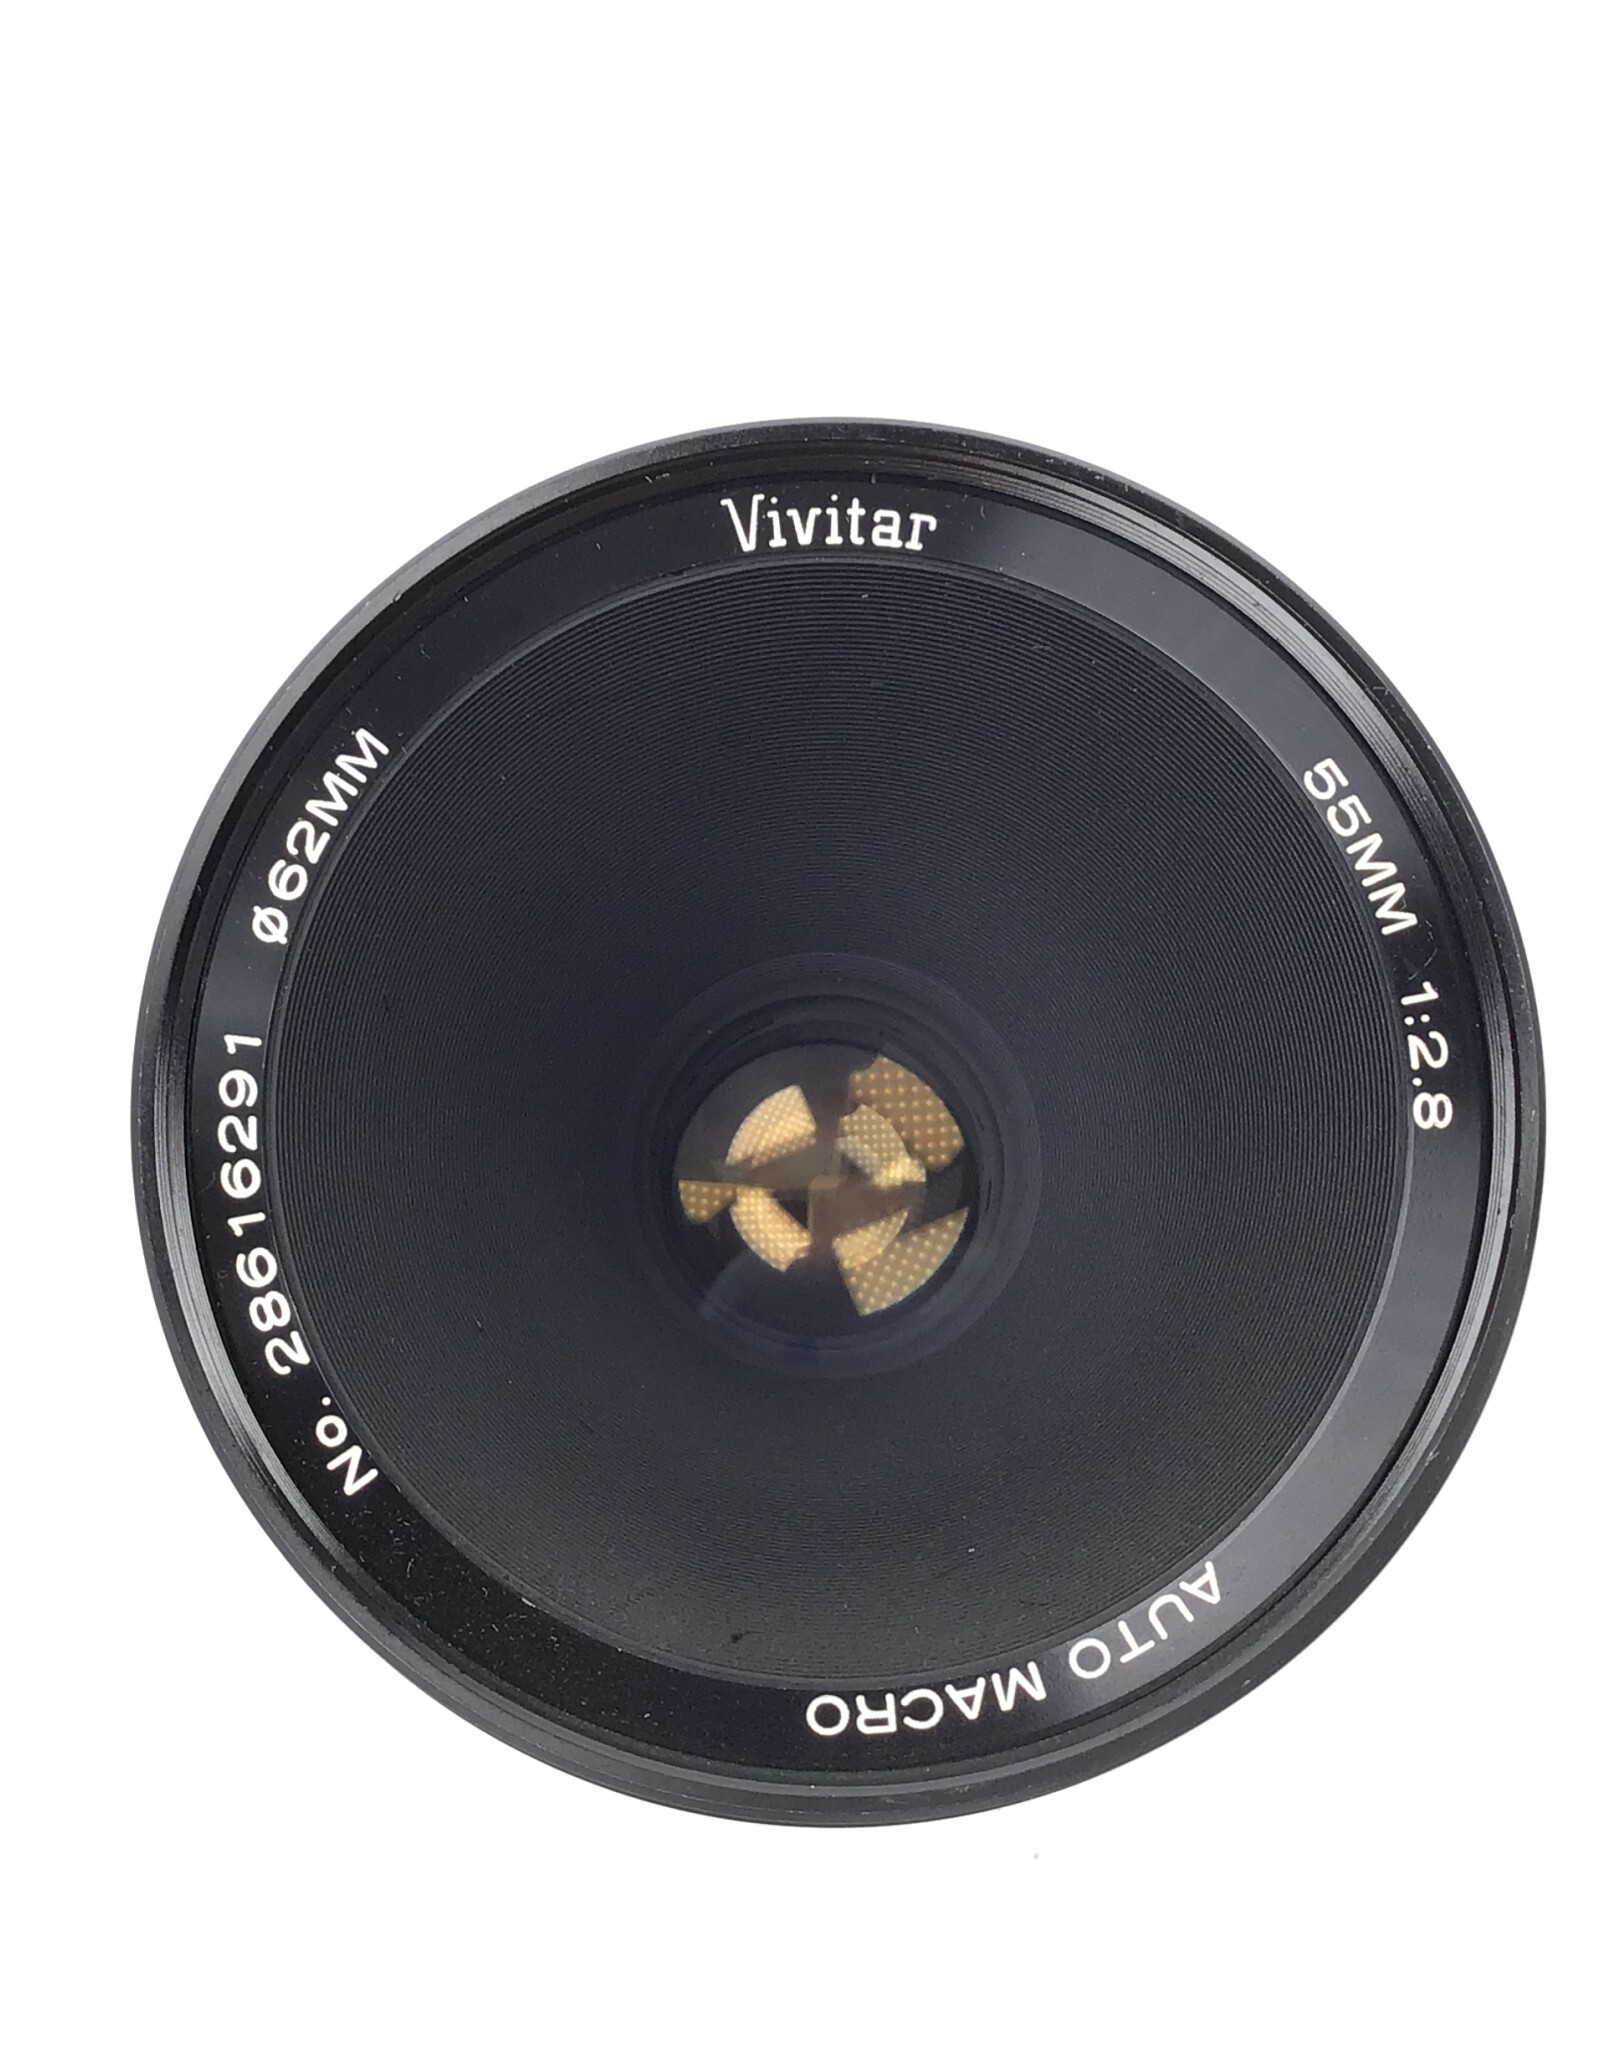 CANON Vivitar Canon FD 55mm f2.8 Macro Lens Used Good